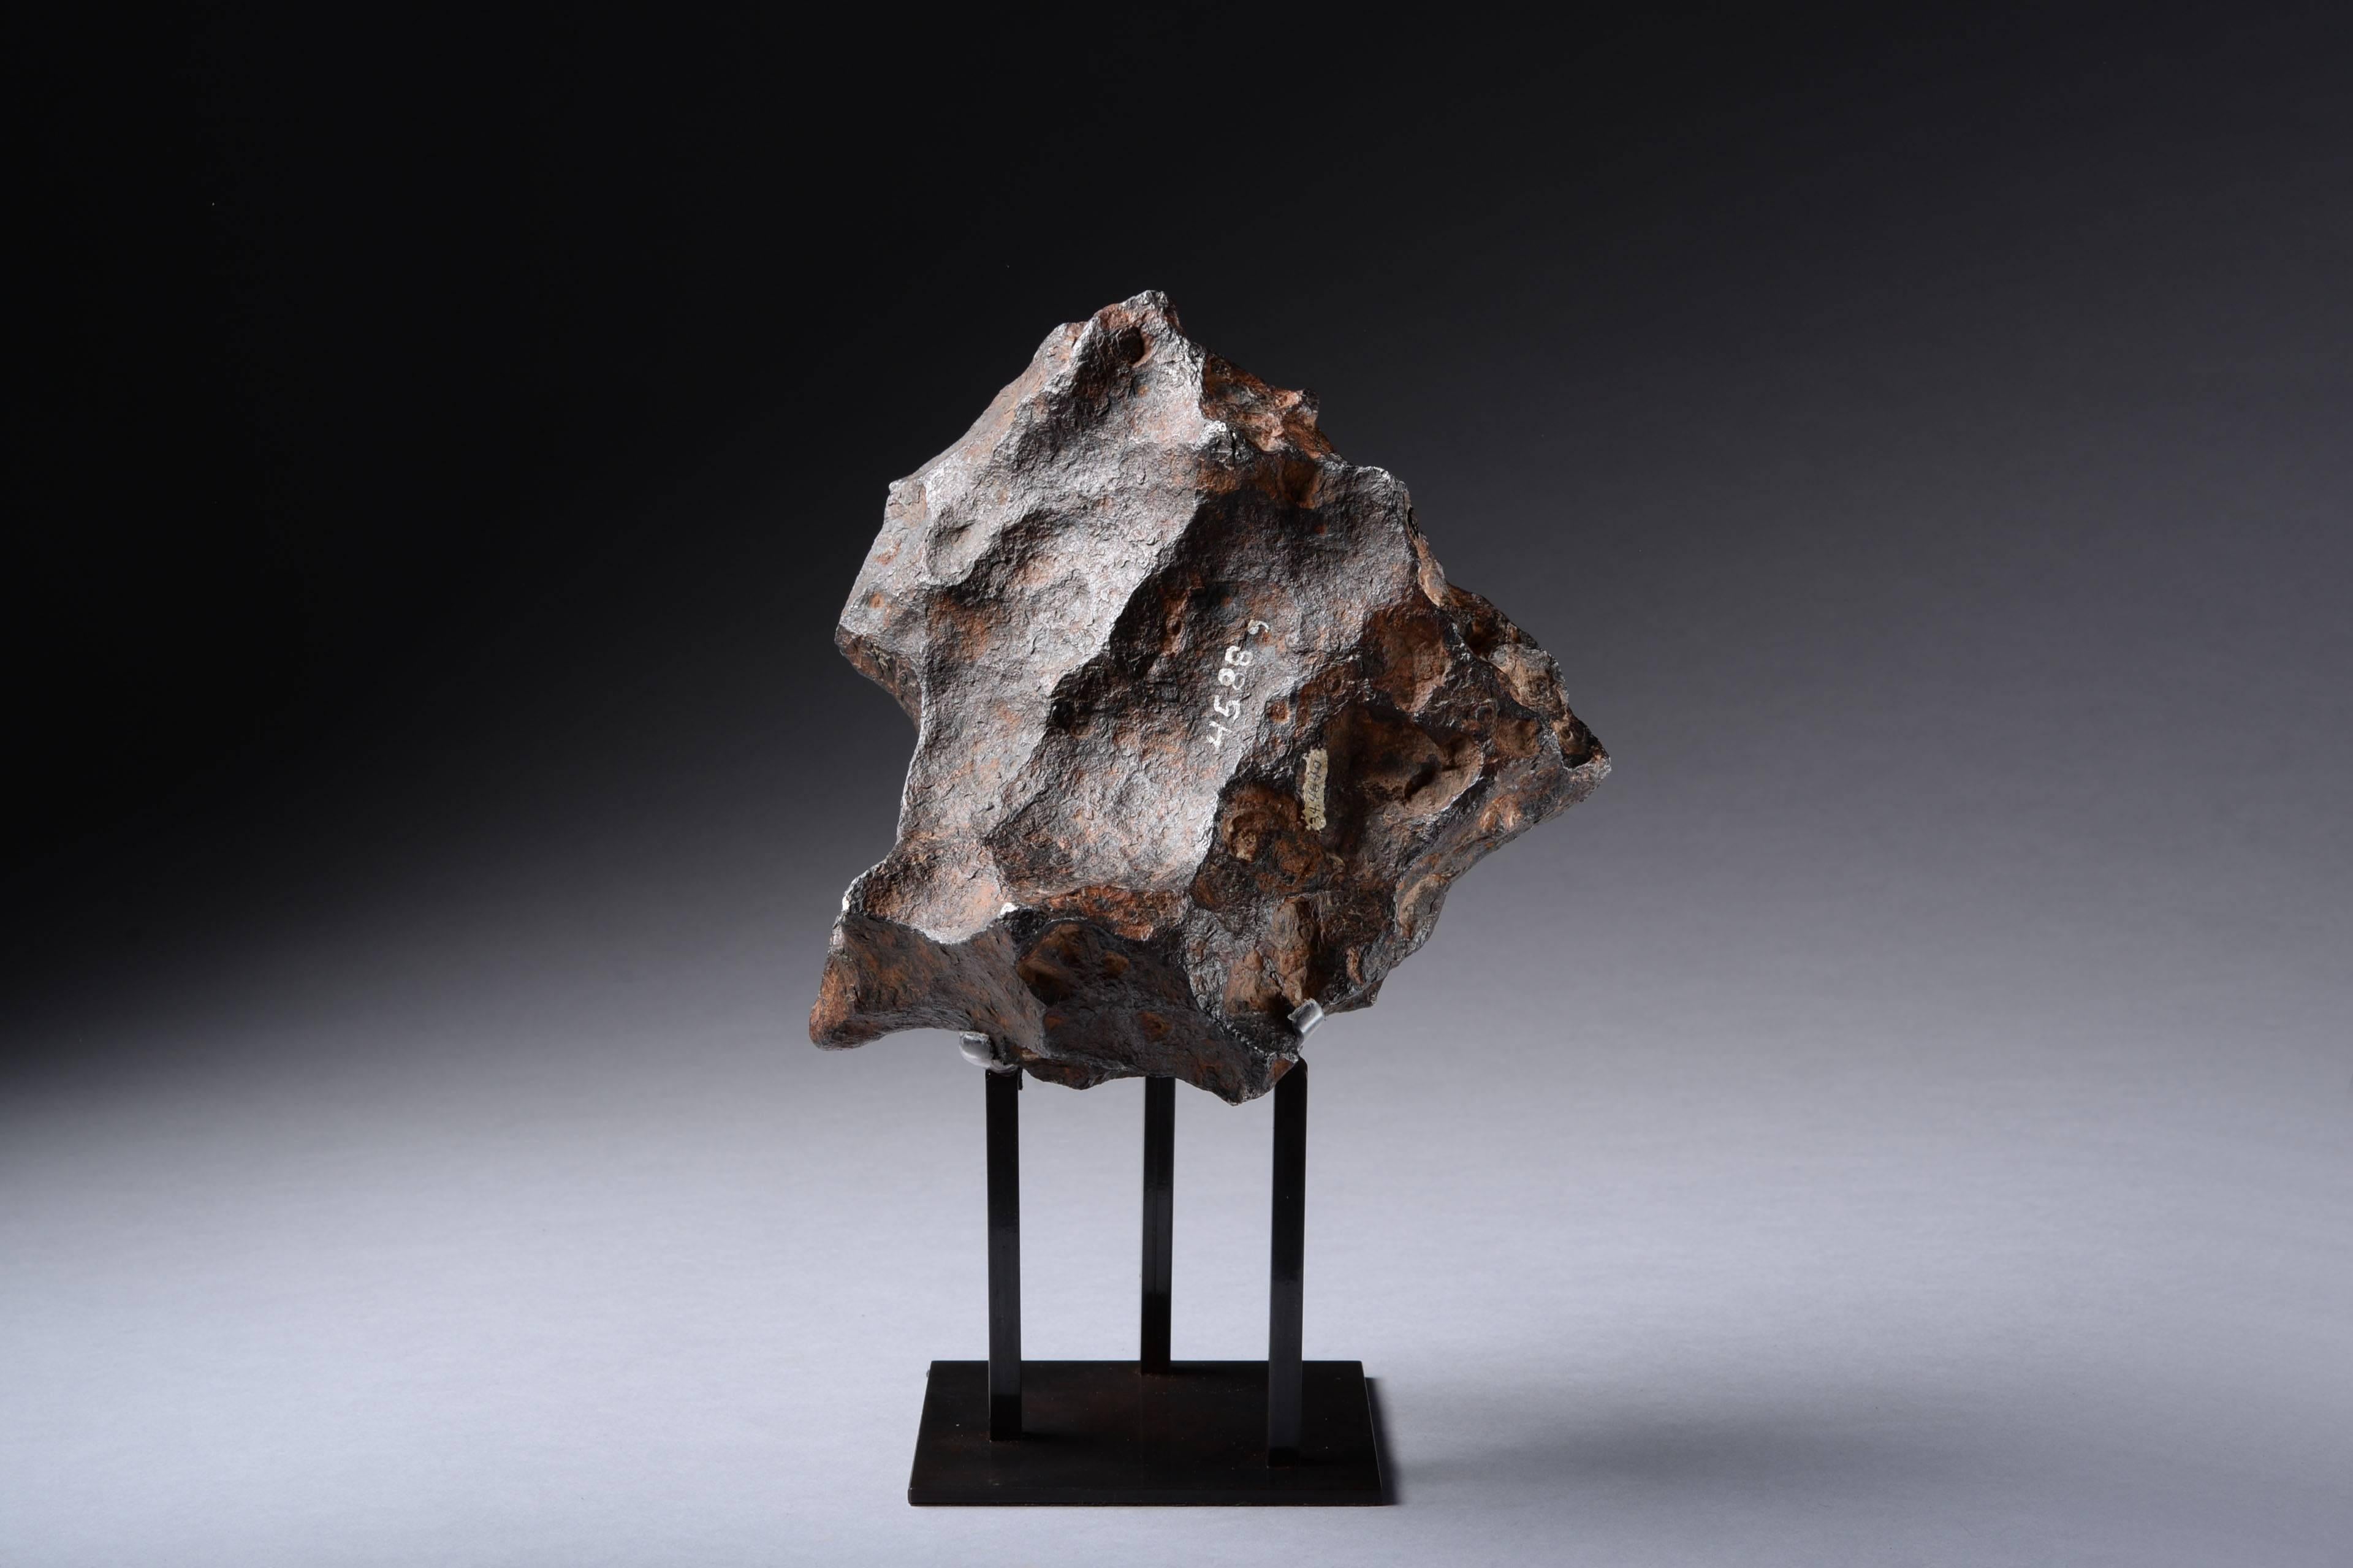 Superb Extra-Terrestrial Abstract Sculpture, Iron Meteorite 4